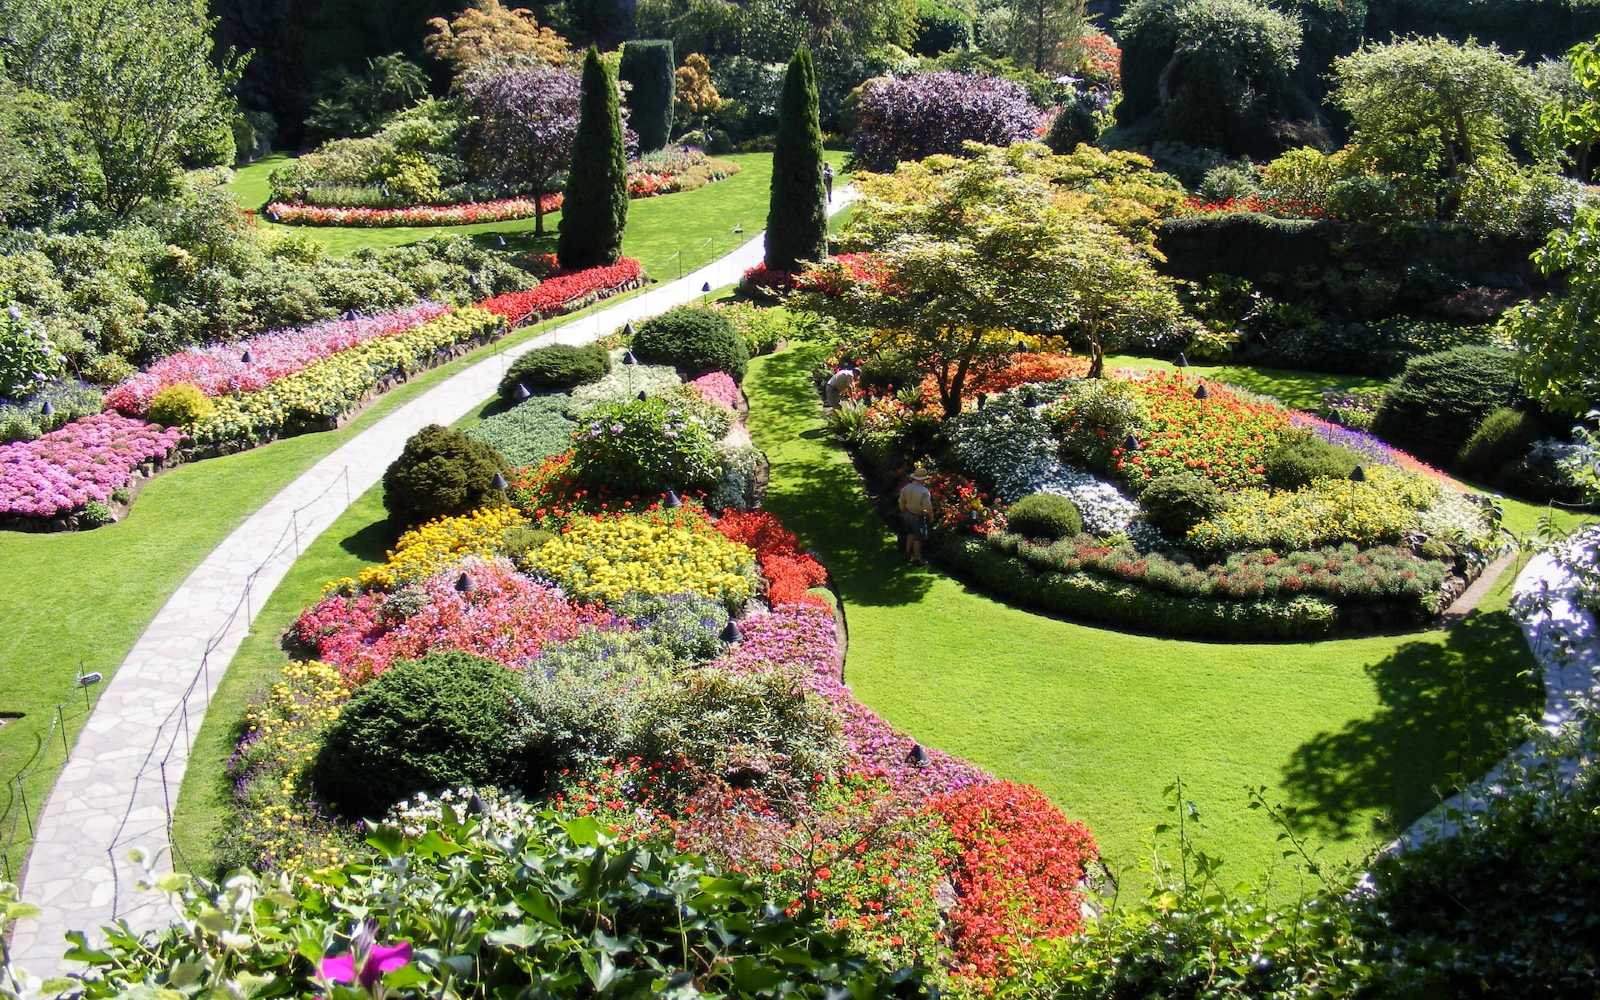 the famed Sunken Garden at butchart Gardens, Victoria.